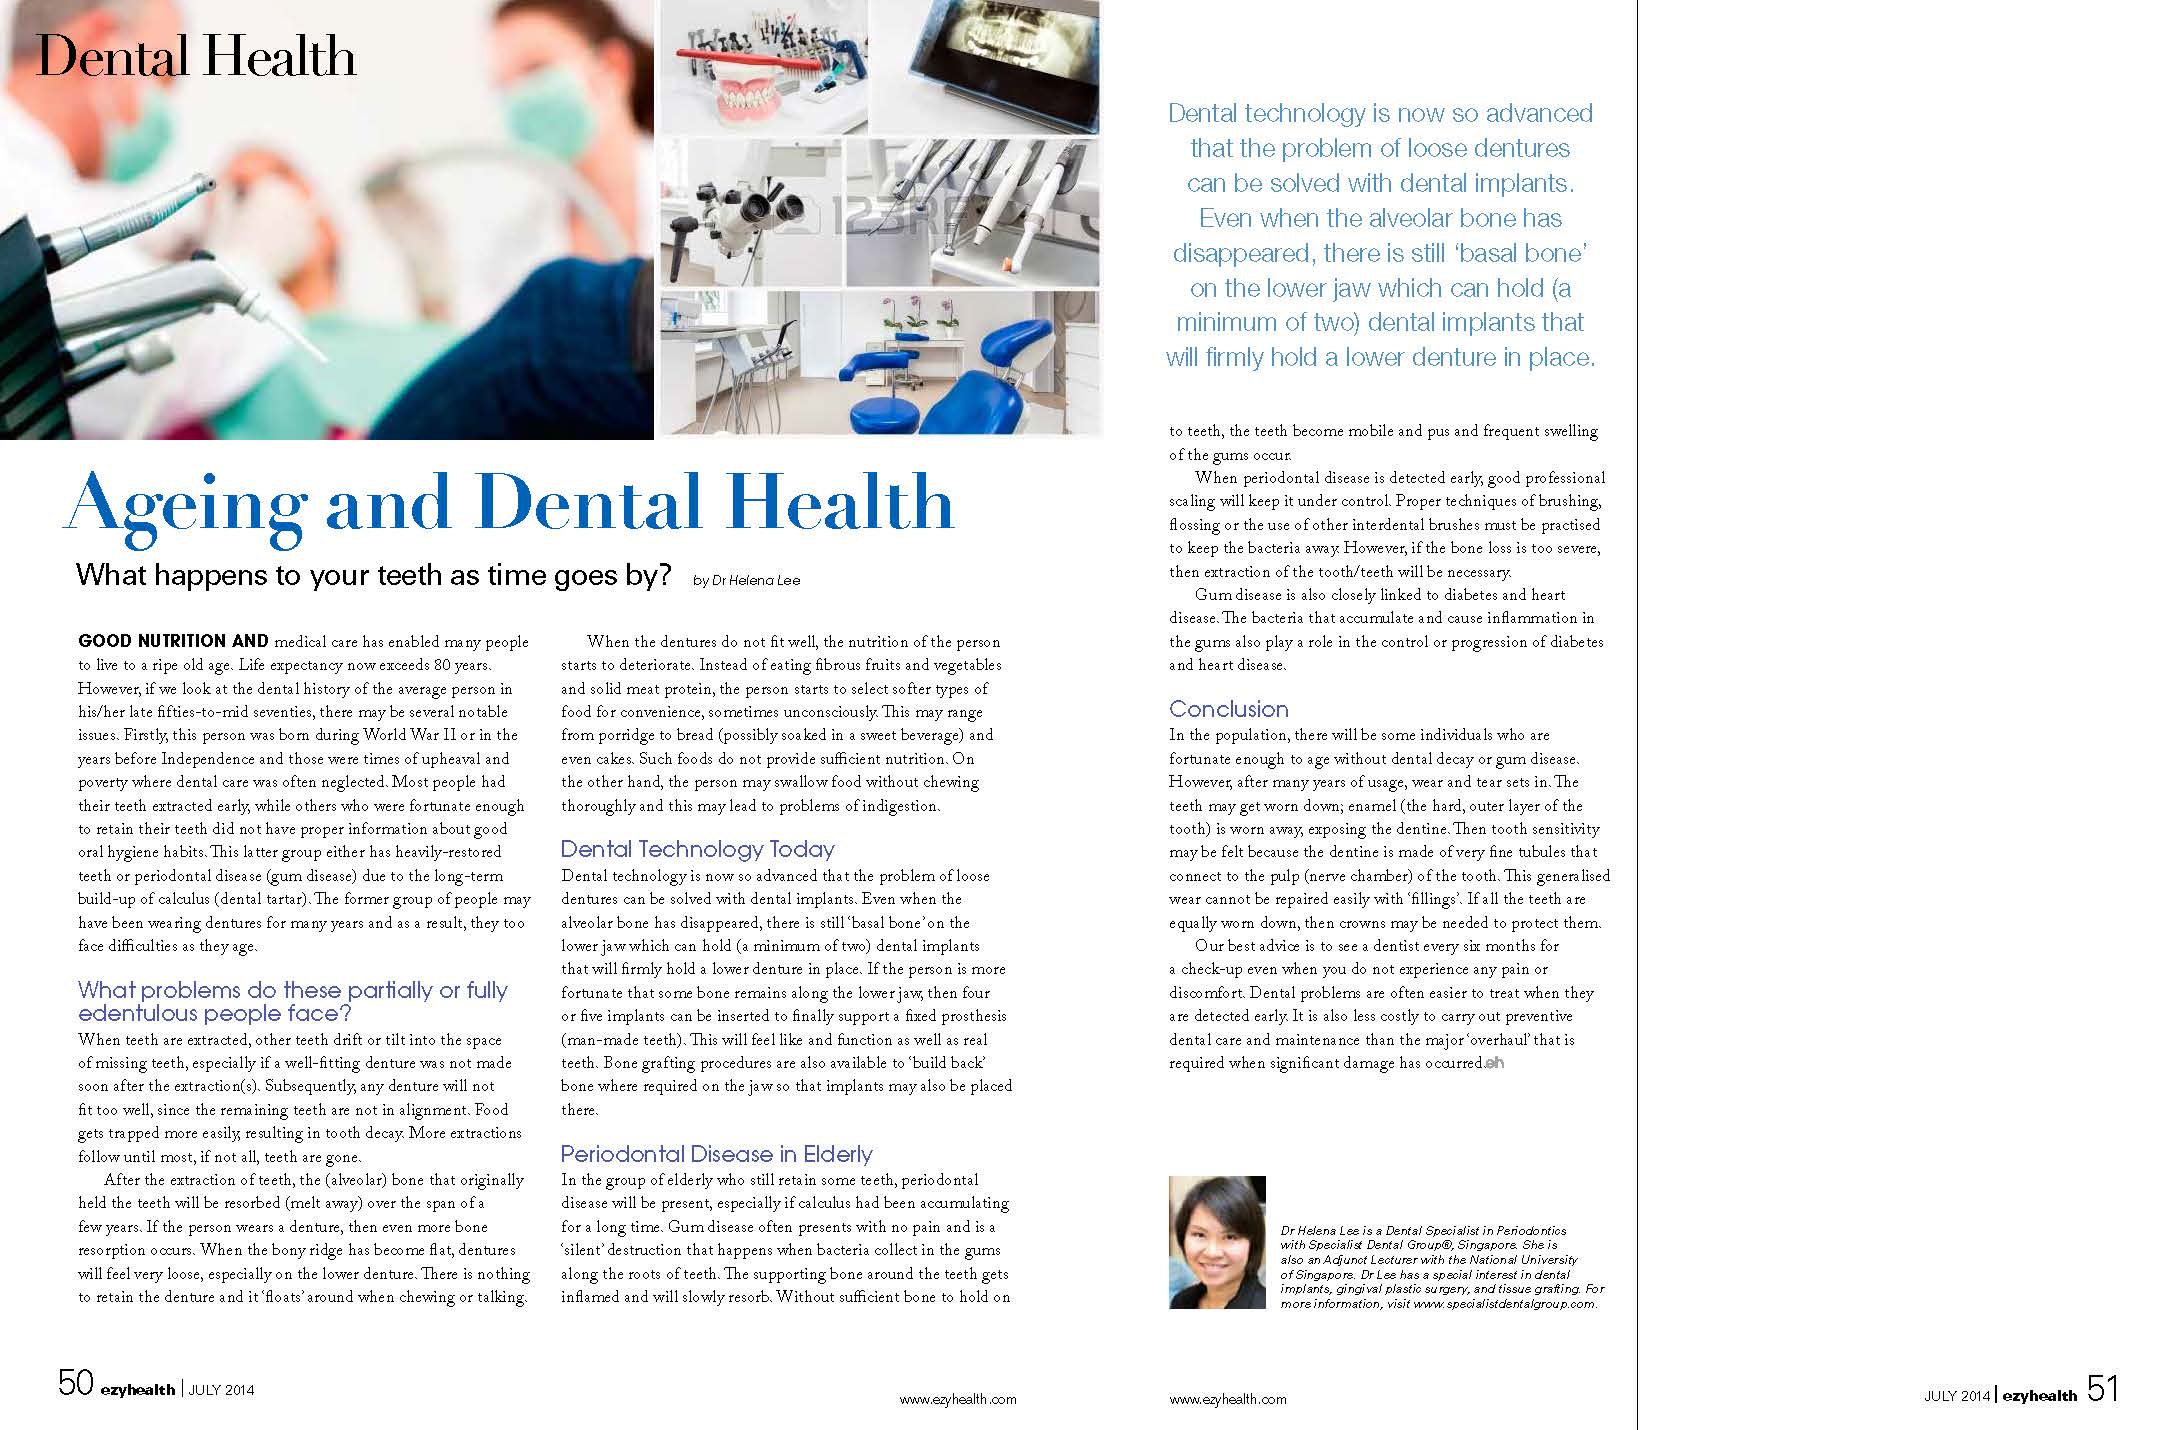 Ezyhealth Magazine, July 2014 issue: “Ageing and Dental Health”